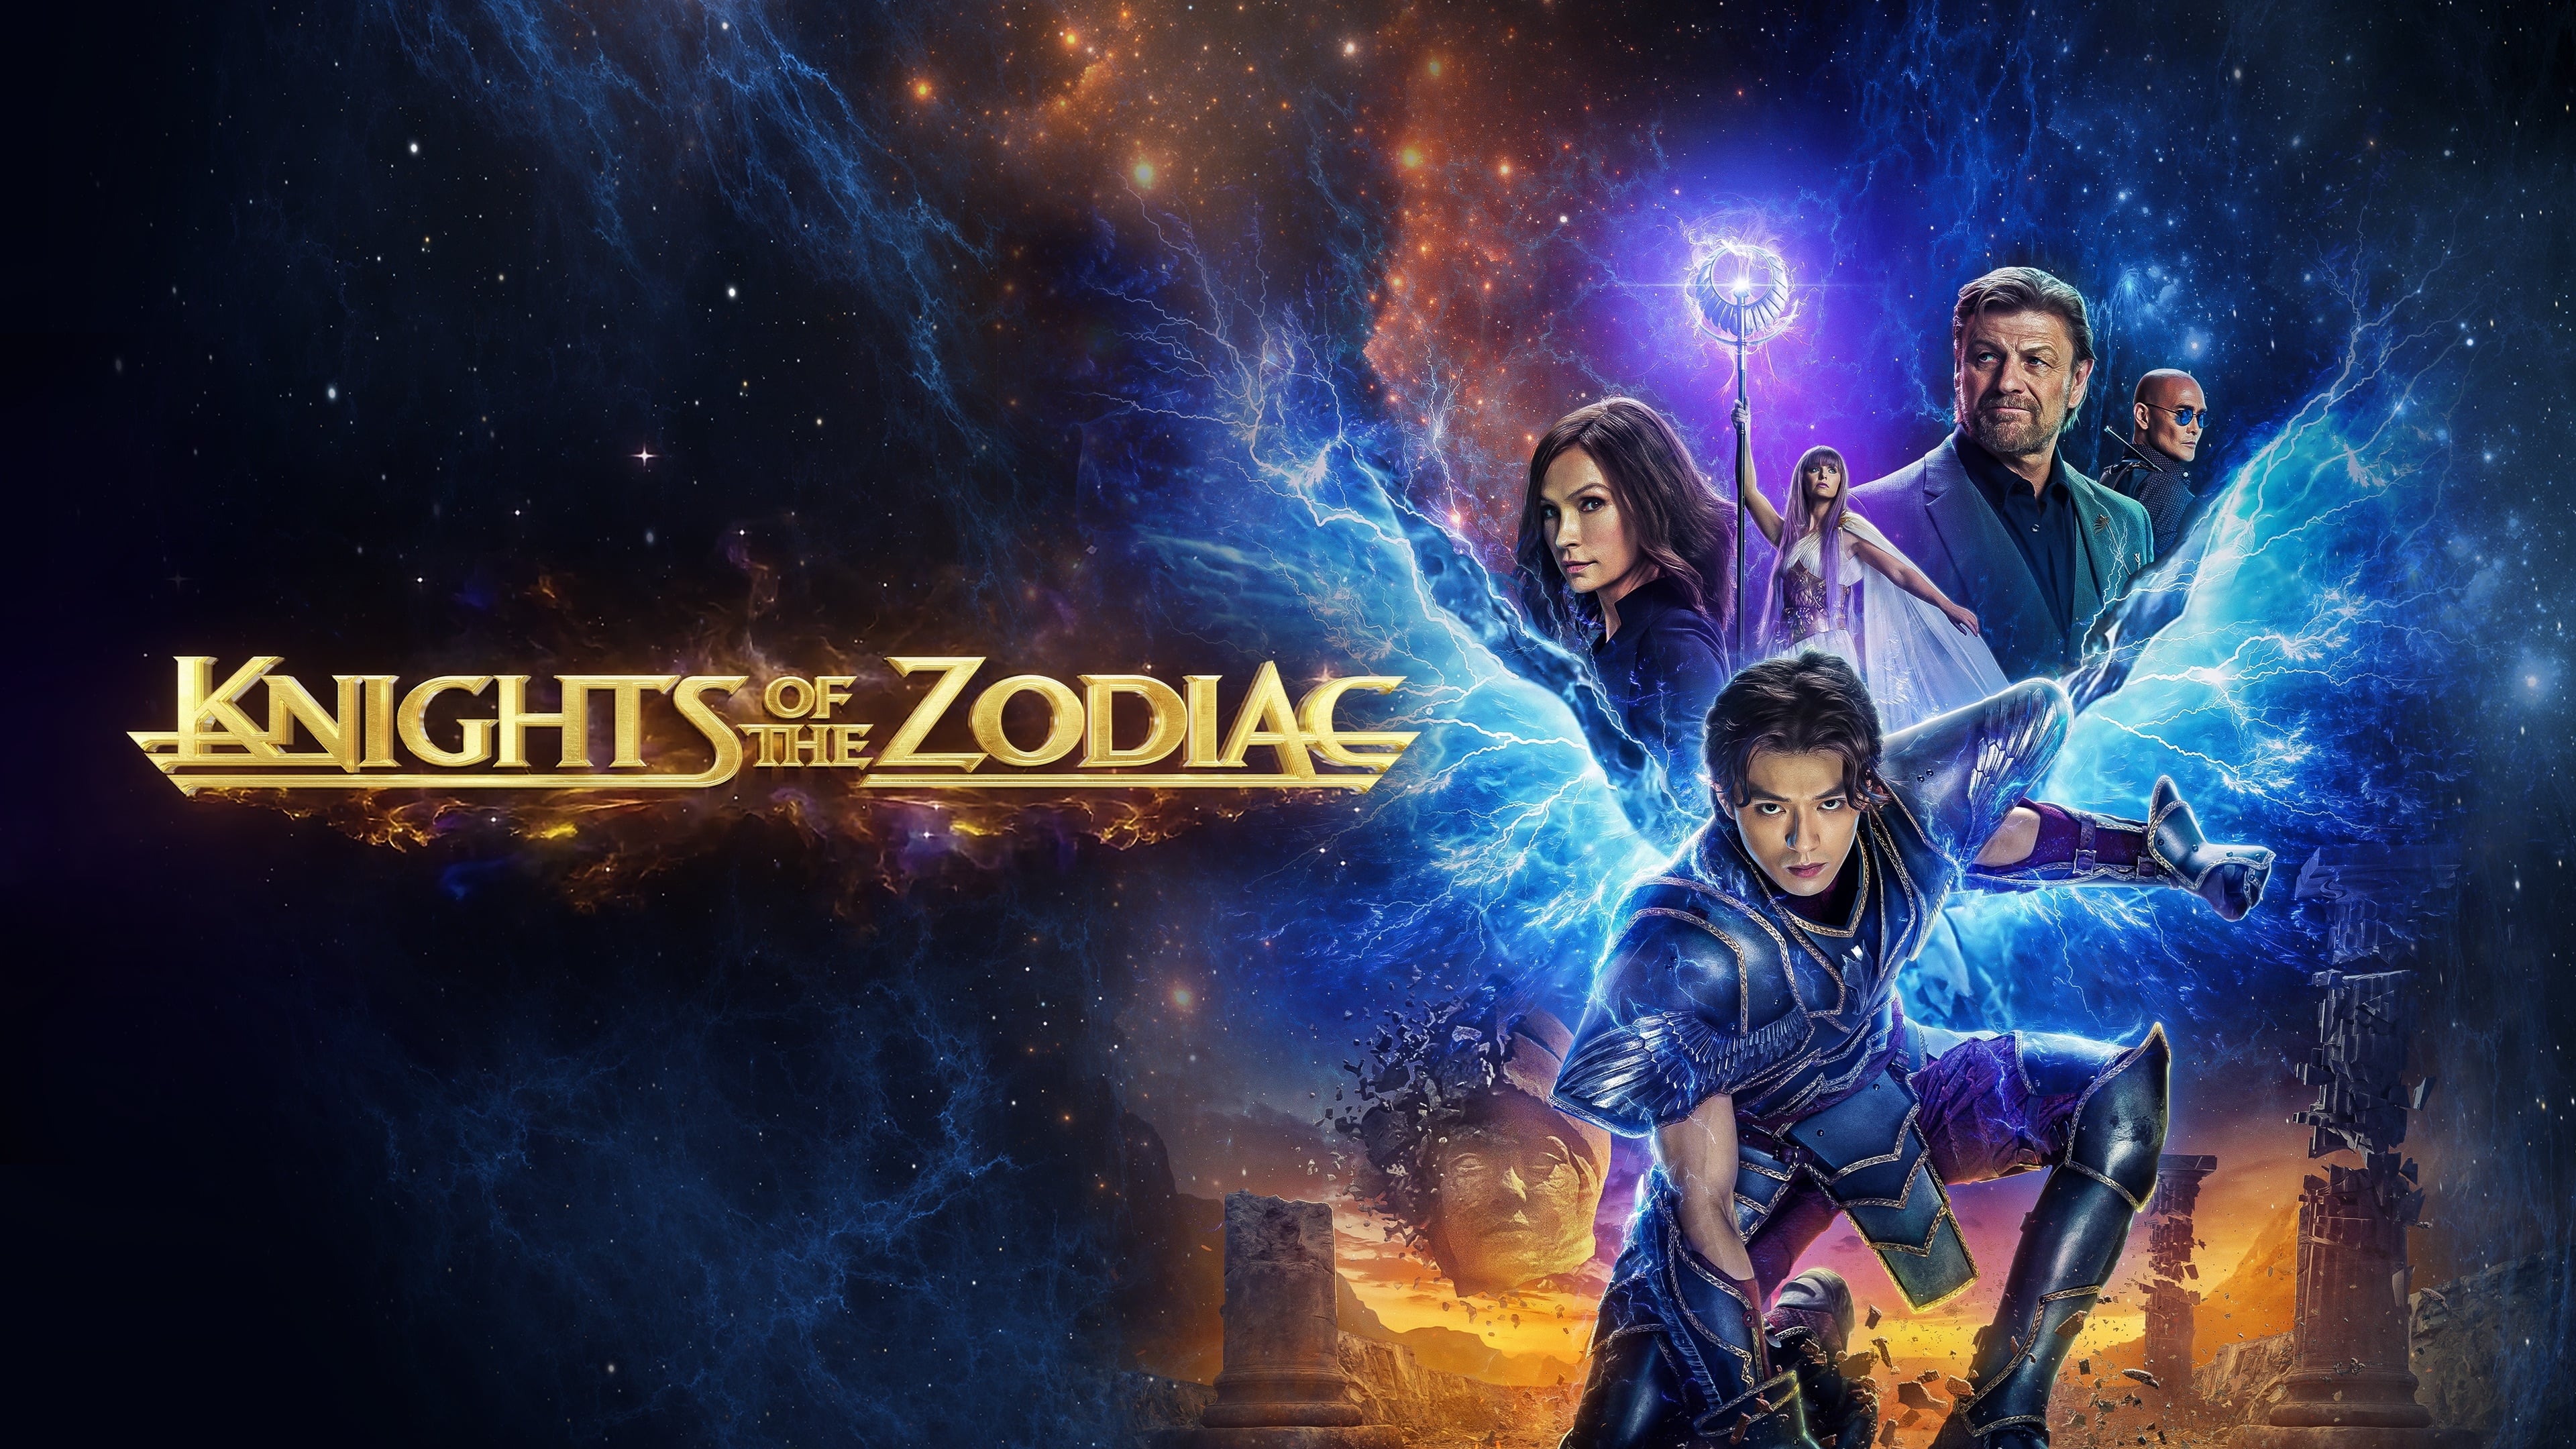 Knights of the Zodiac HD Full Movie